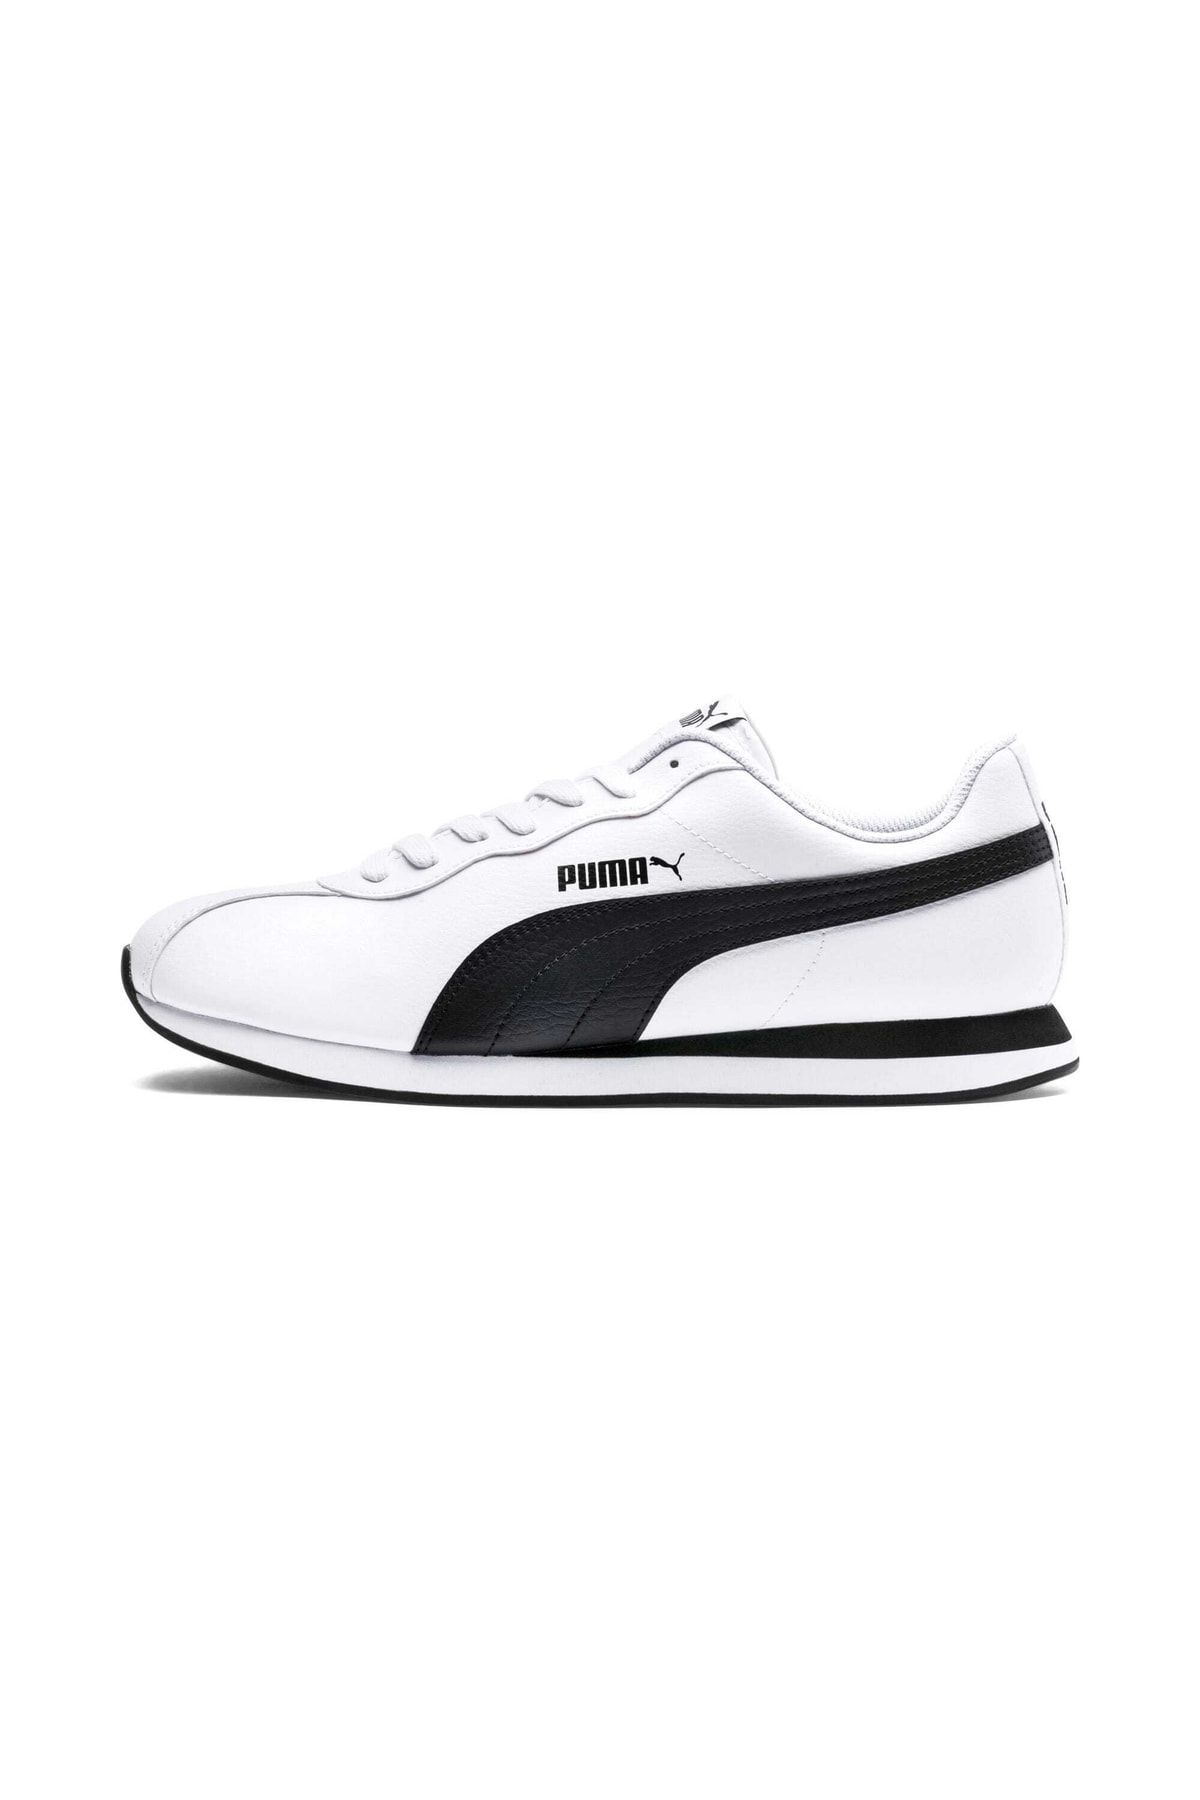 Puma Turin Ii Beyaz Siyah Erkek Sneaker Ayakkabı 100352194